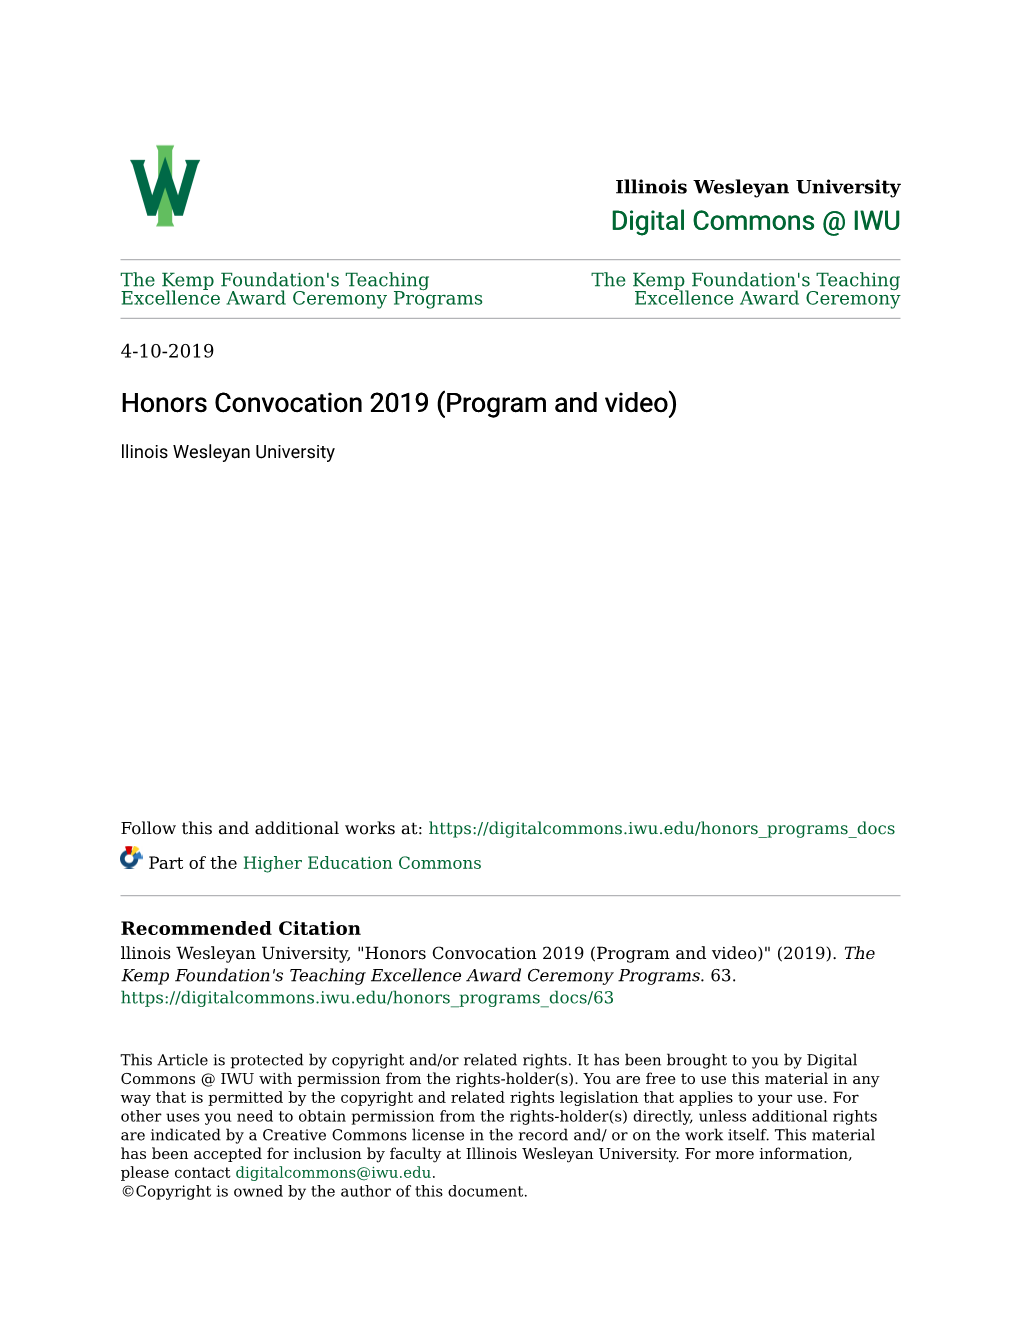 Honors Convocation 2019 (Program and Video) Llinois Wesleyan University